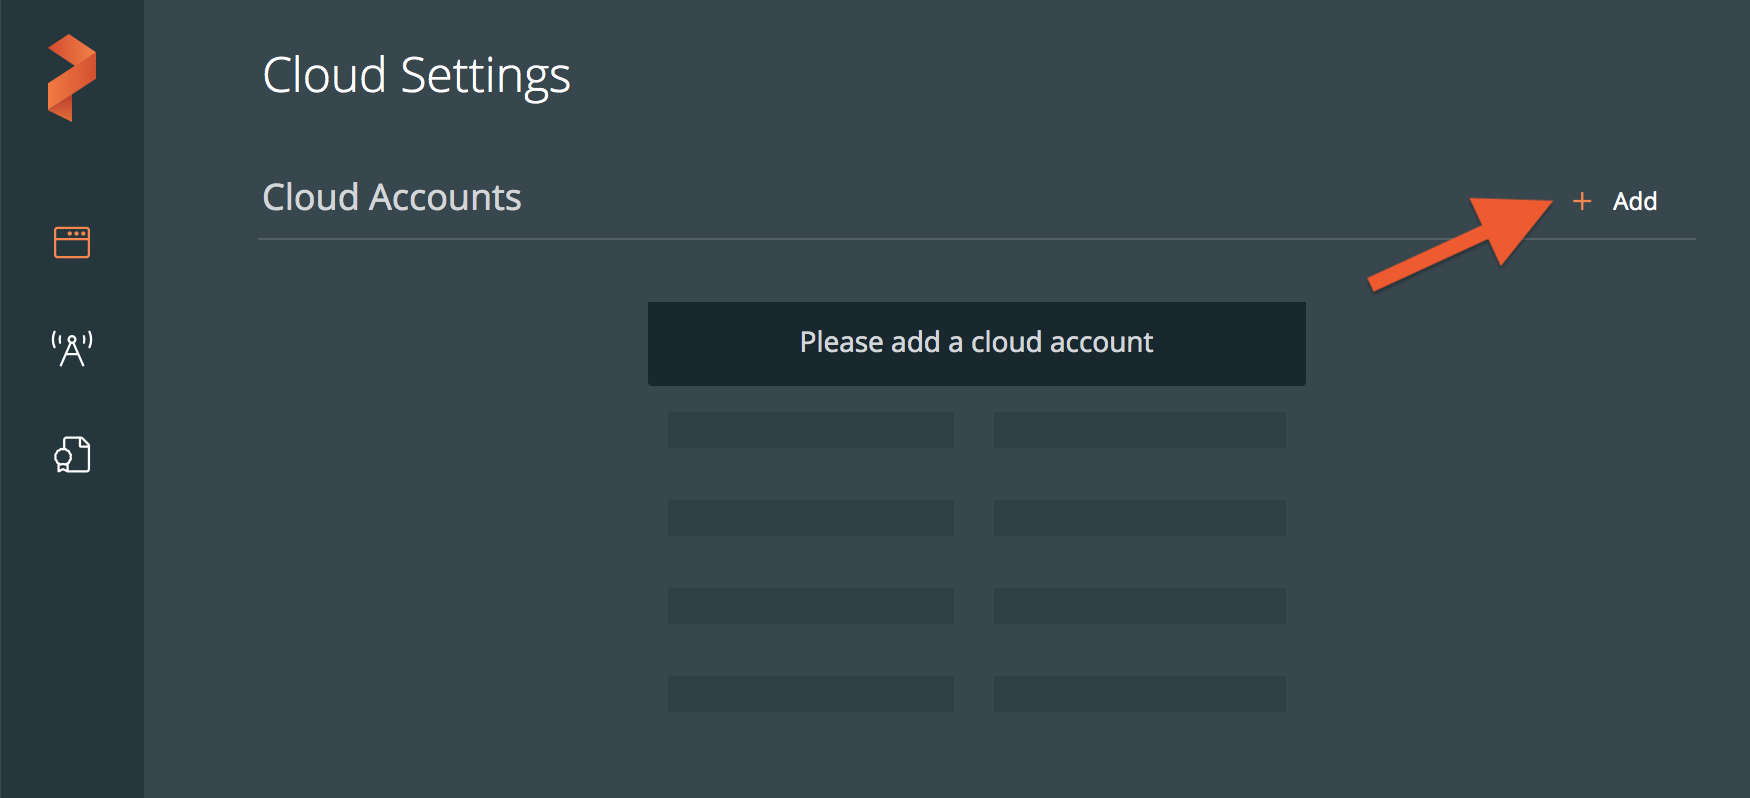 Add new cloud account